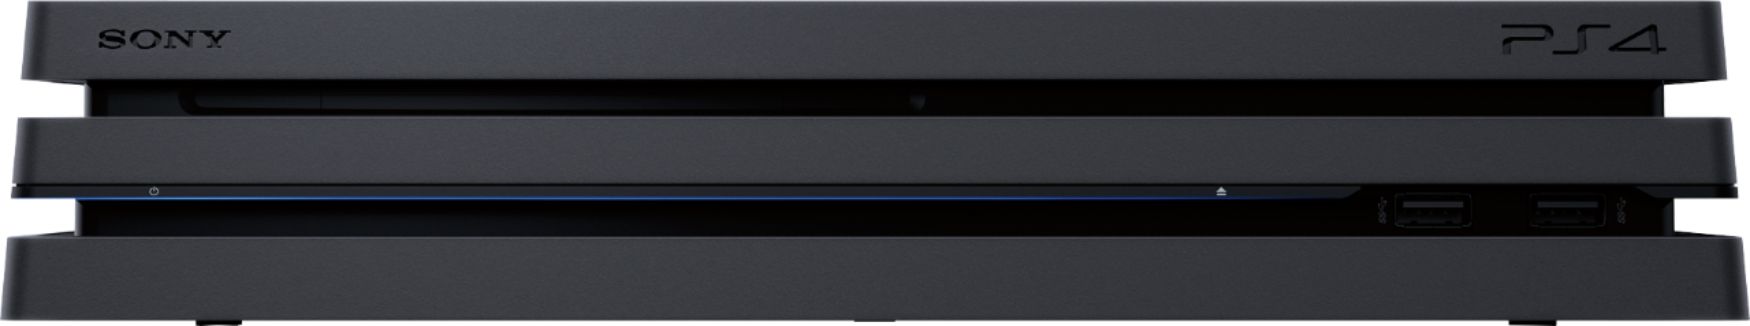  Sony - PlayStation 4 Pro Console (3002470) Jet Black - 1TB -  Renewed : Video Games